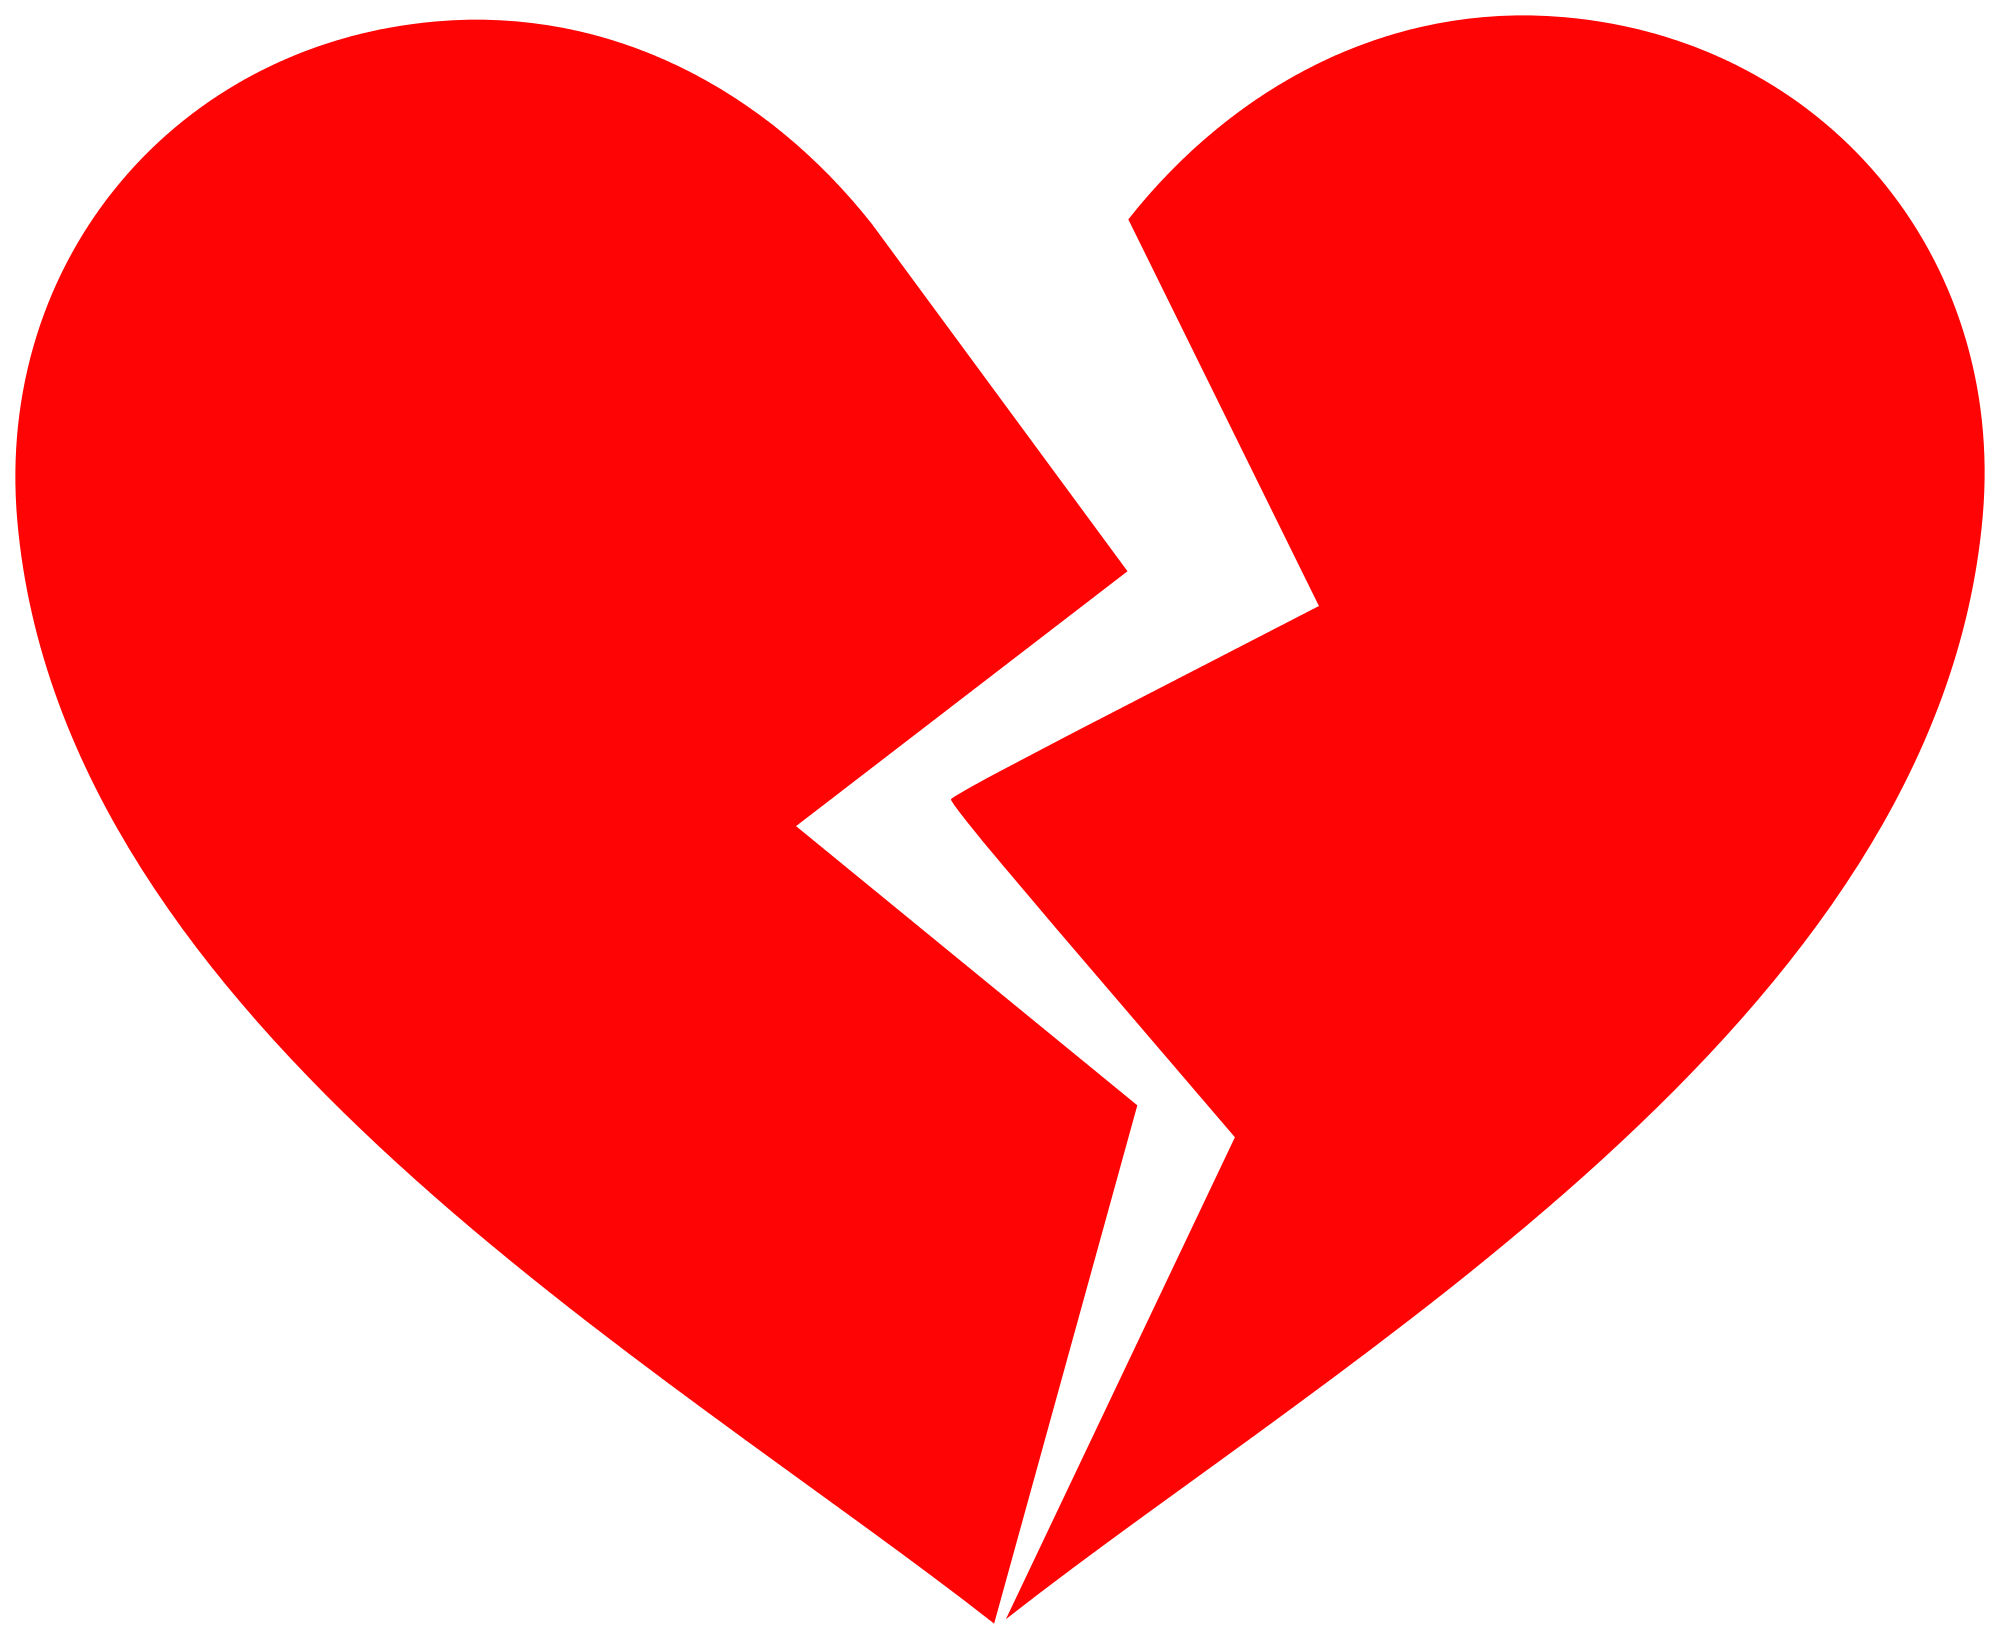 Broken Hearts clipart #7, Download drawings